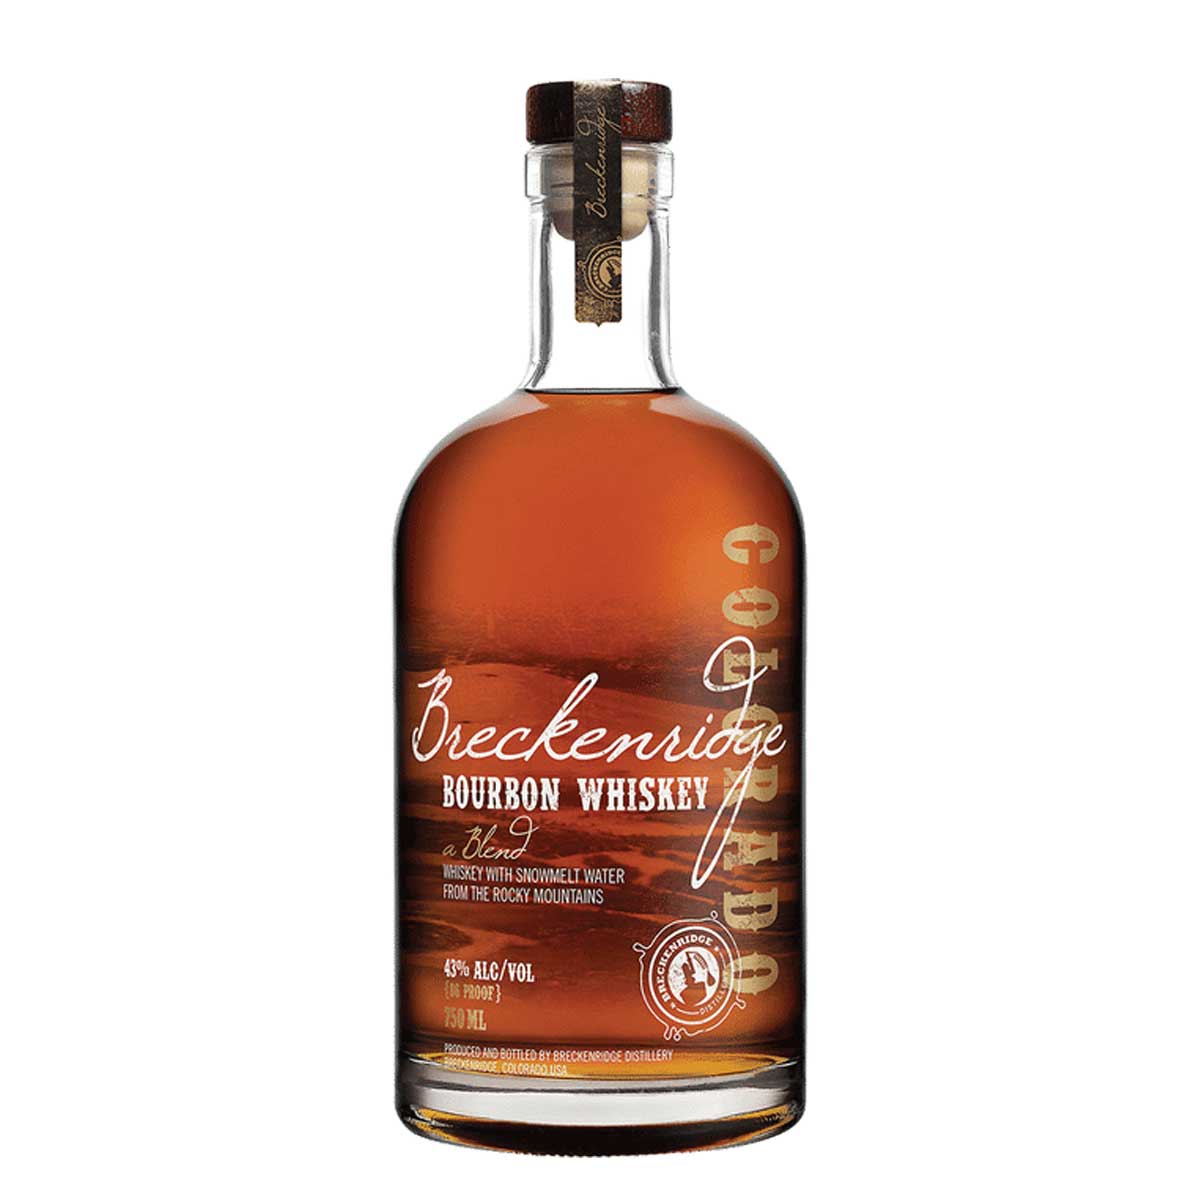 TAG Liquor Stores Delivery - Breckenridge Bourbon Whiskey 750ml